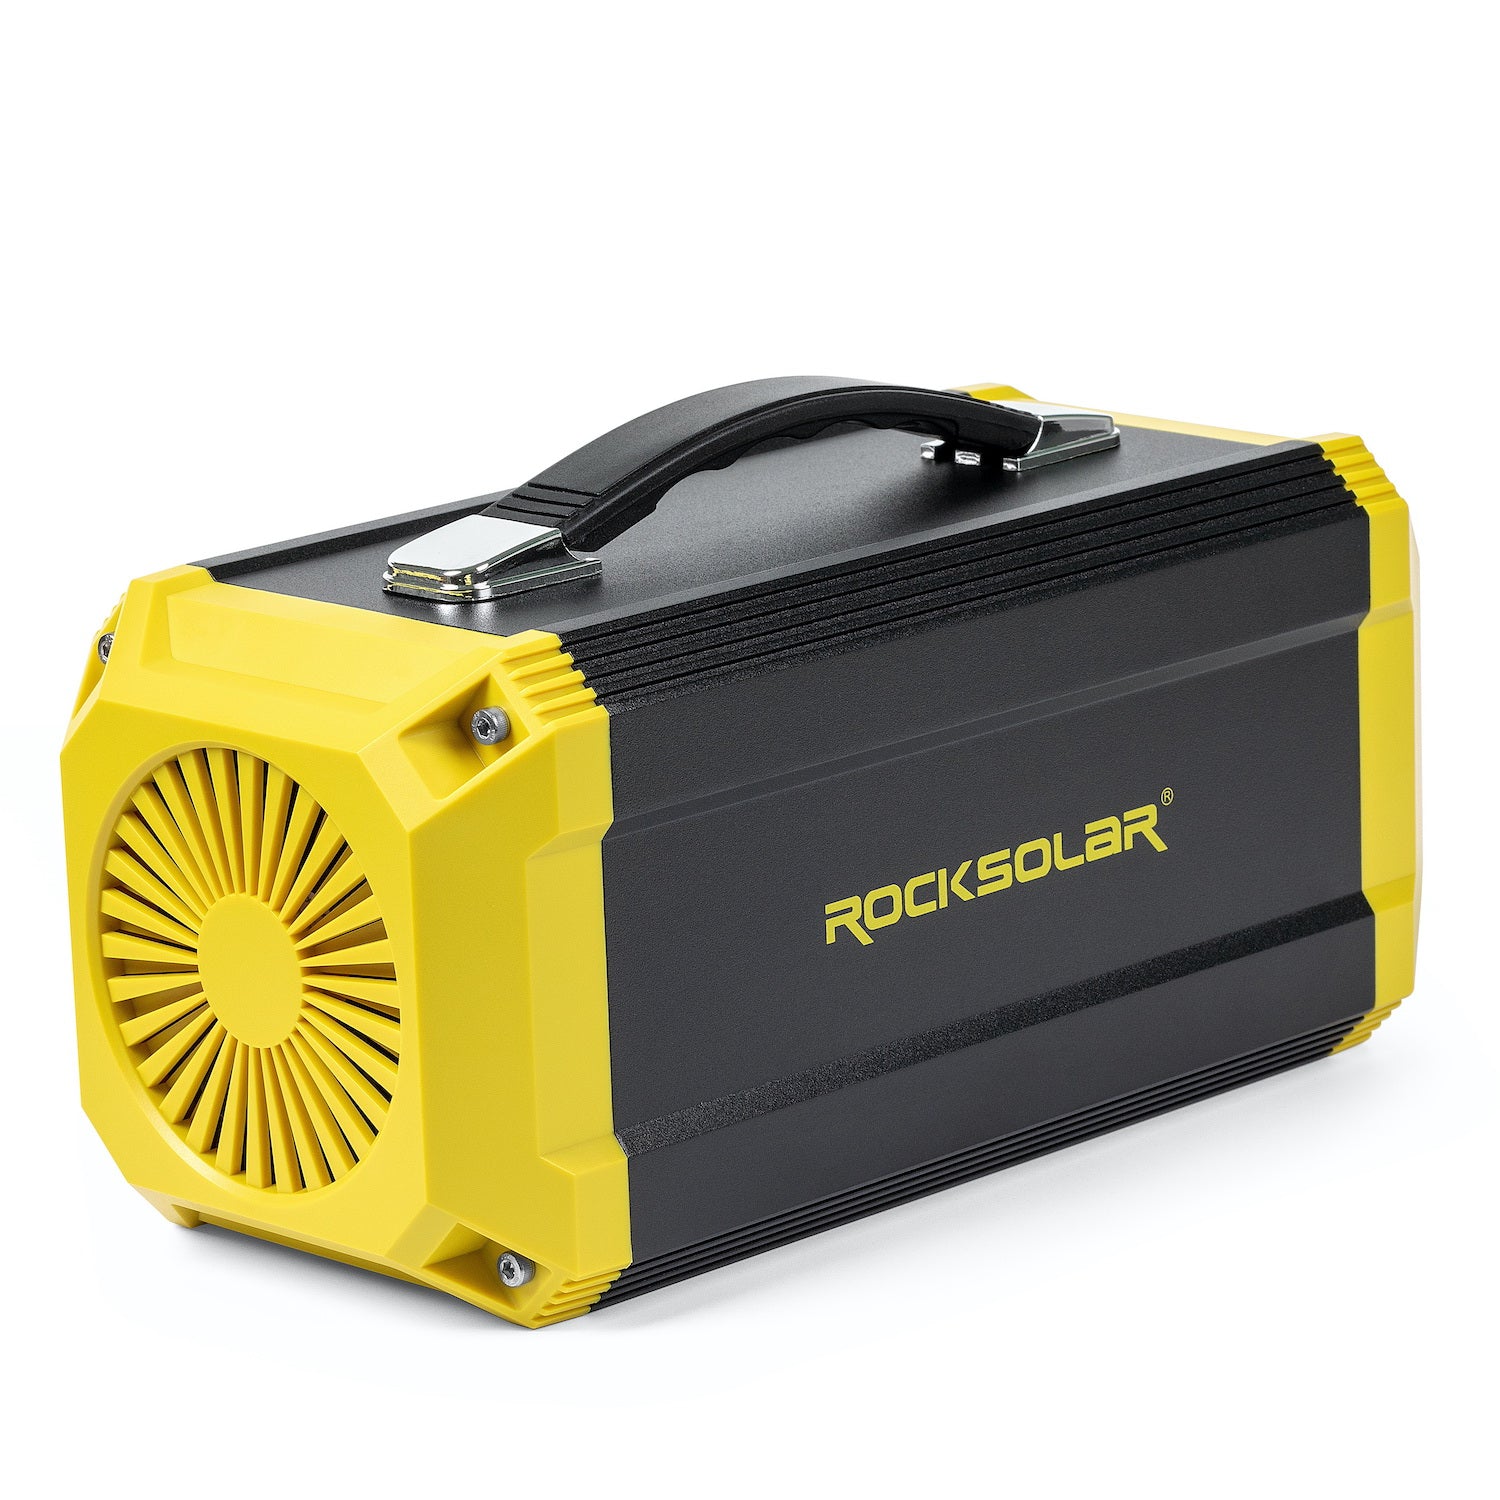 ROCKSOLAR Utility 300W Portable Power Station - Lithium Battery and Solar Generator